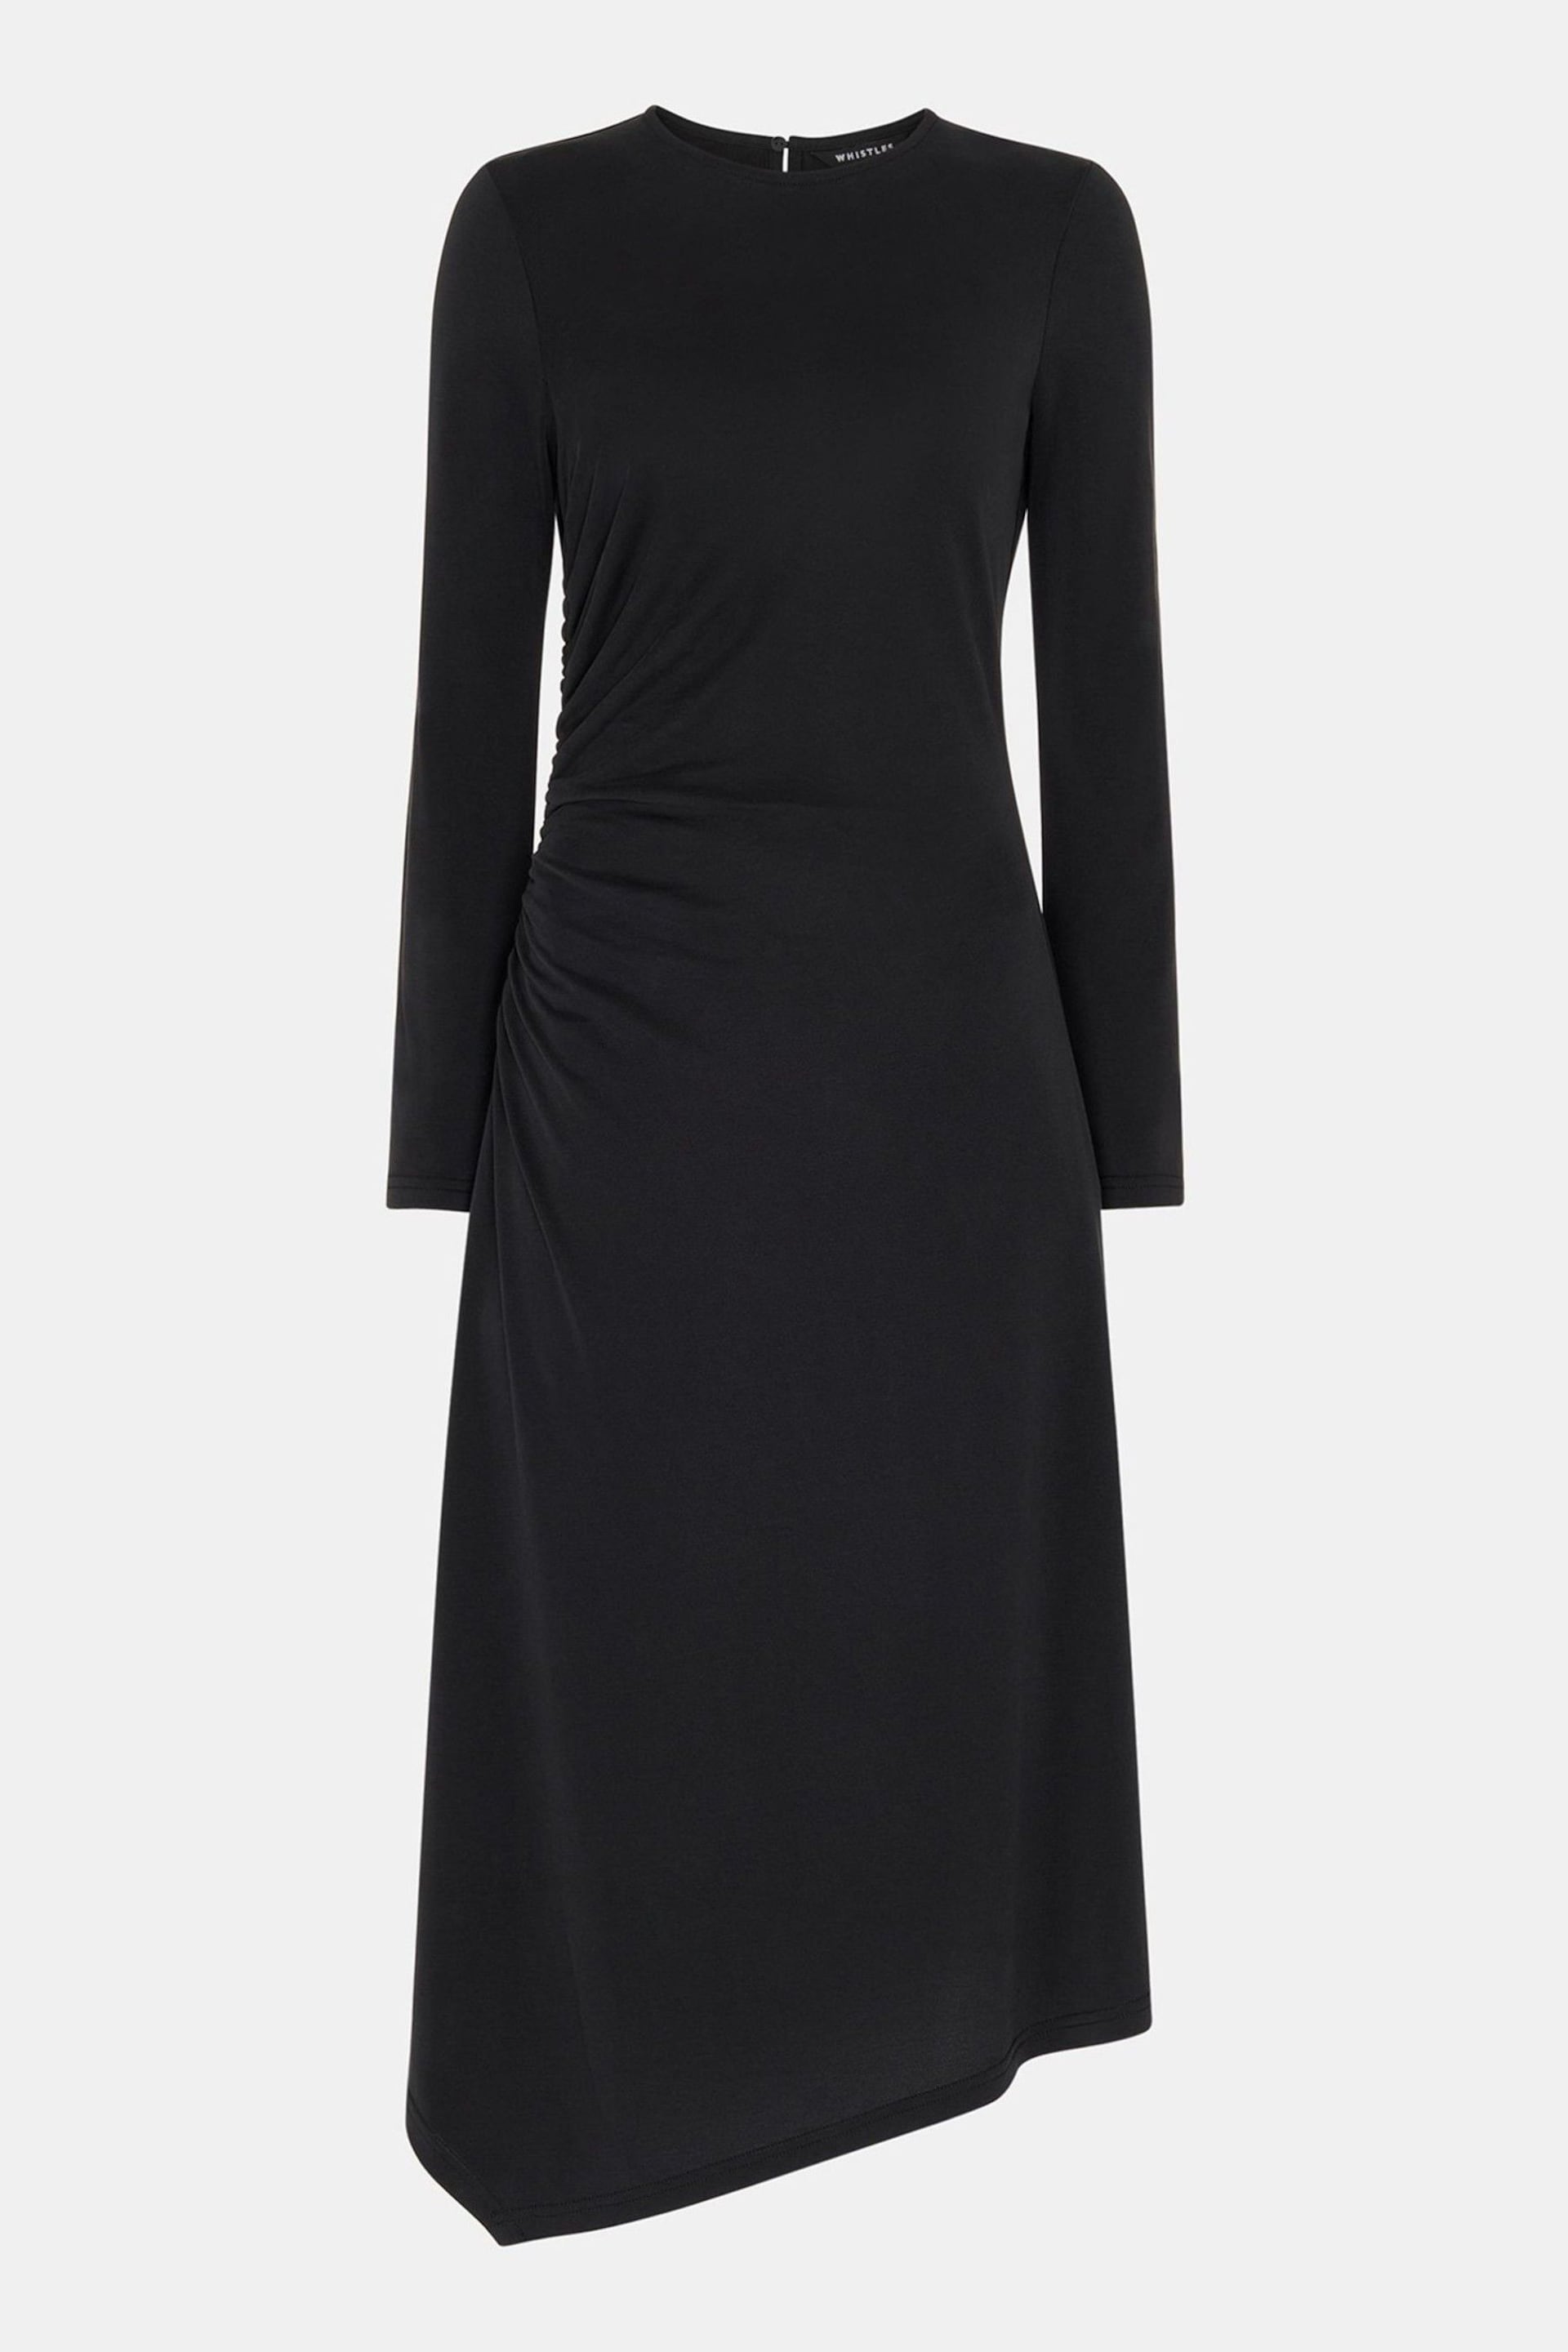 Whistles Asymmetric Jersey Midi Black Dress - Image 5 of 5